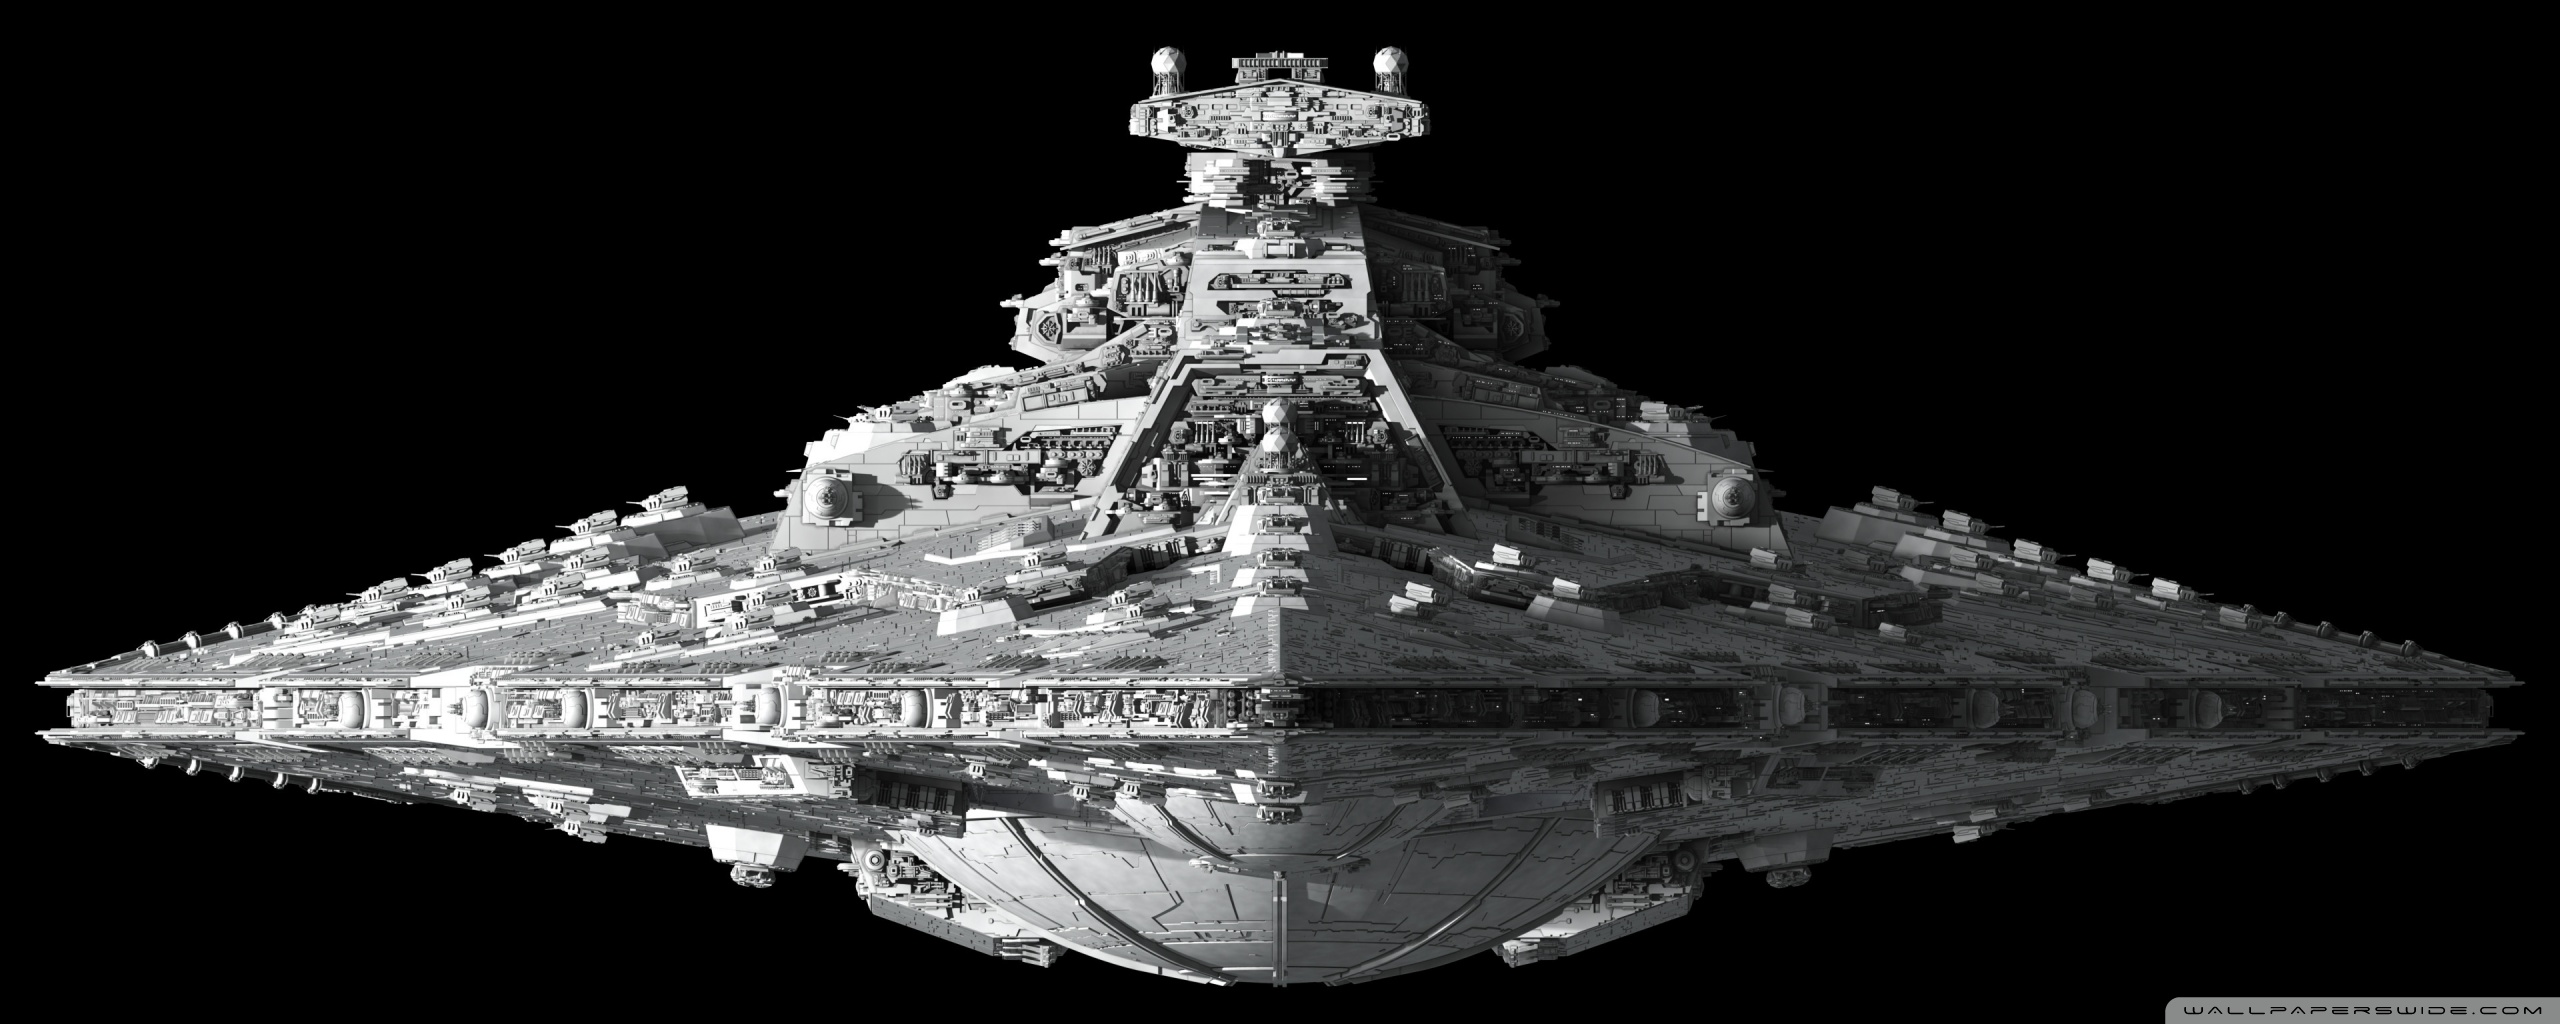 star wars dual screen wallpaper,battleship,vehicle,ship,battlecruiser,black and white